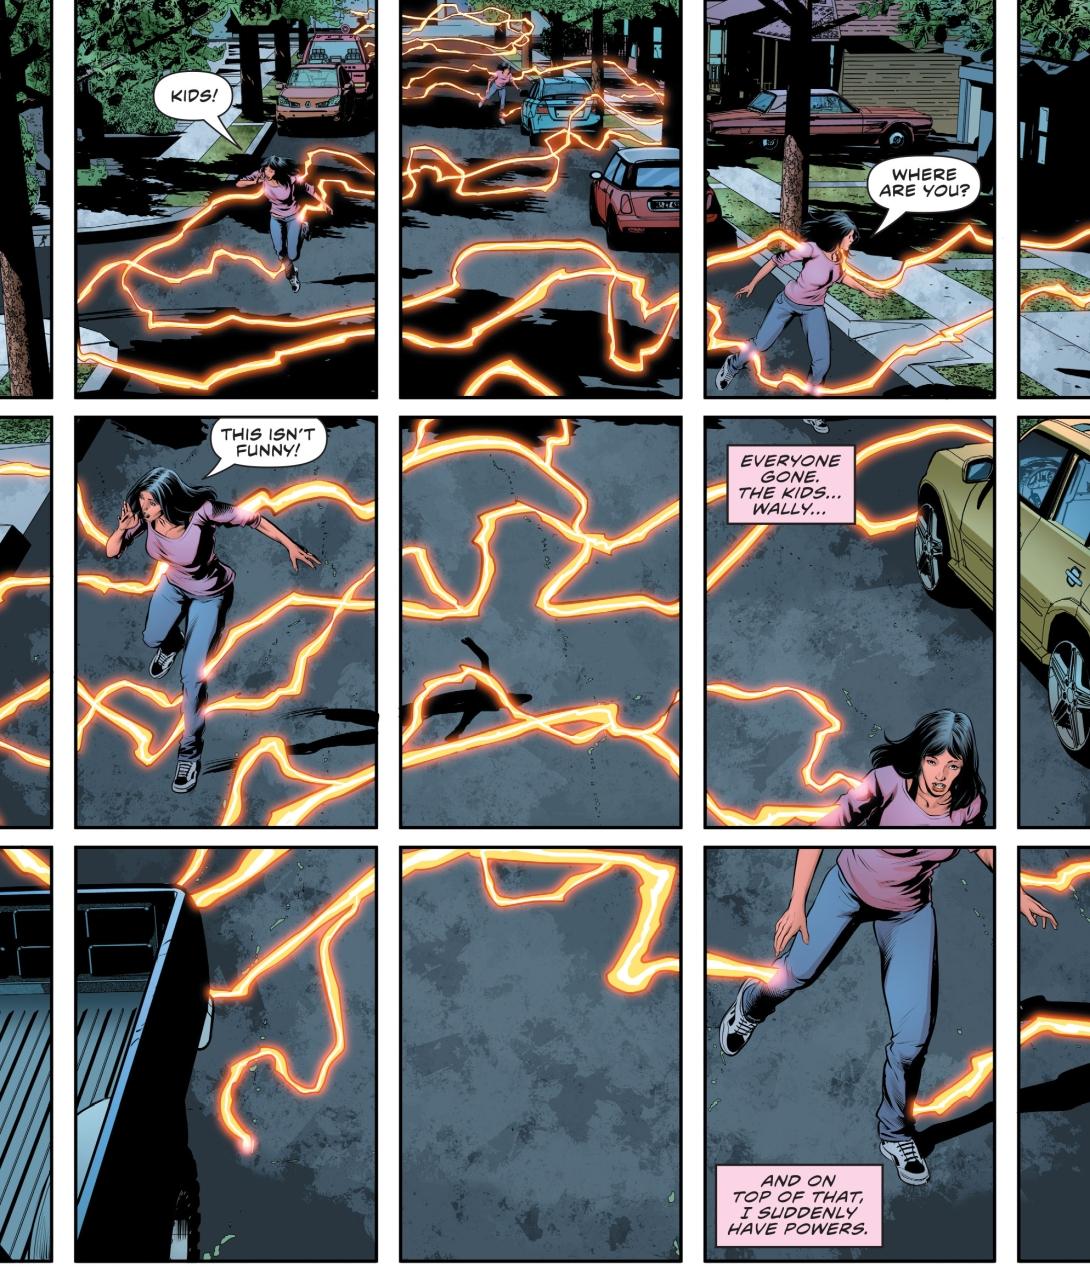 The Flash #780 - DC Comics News